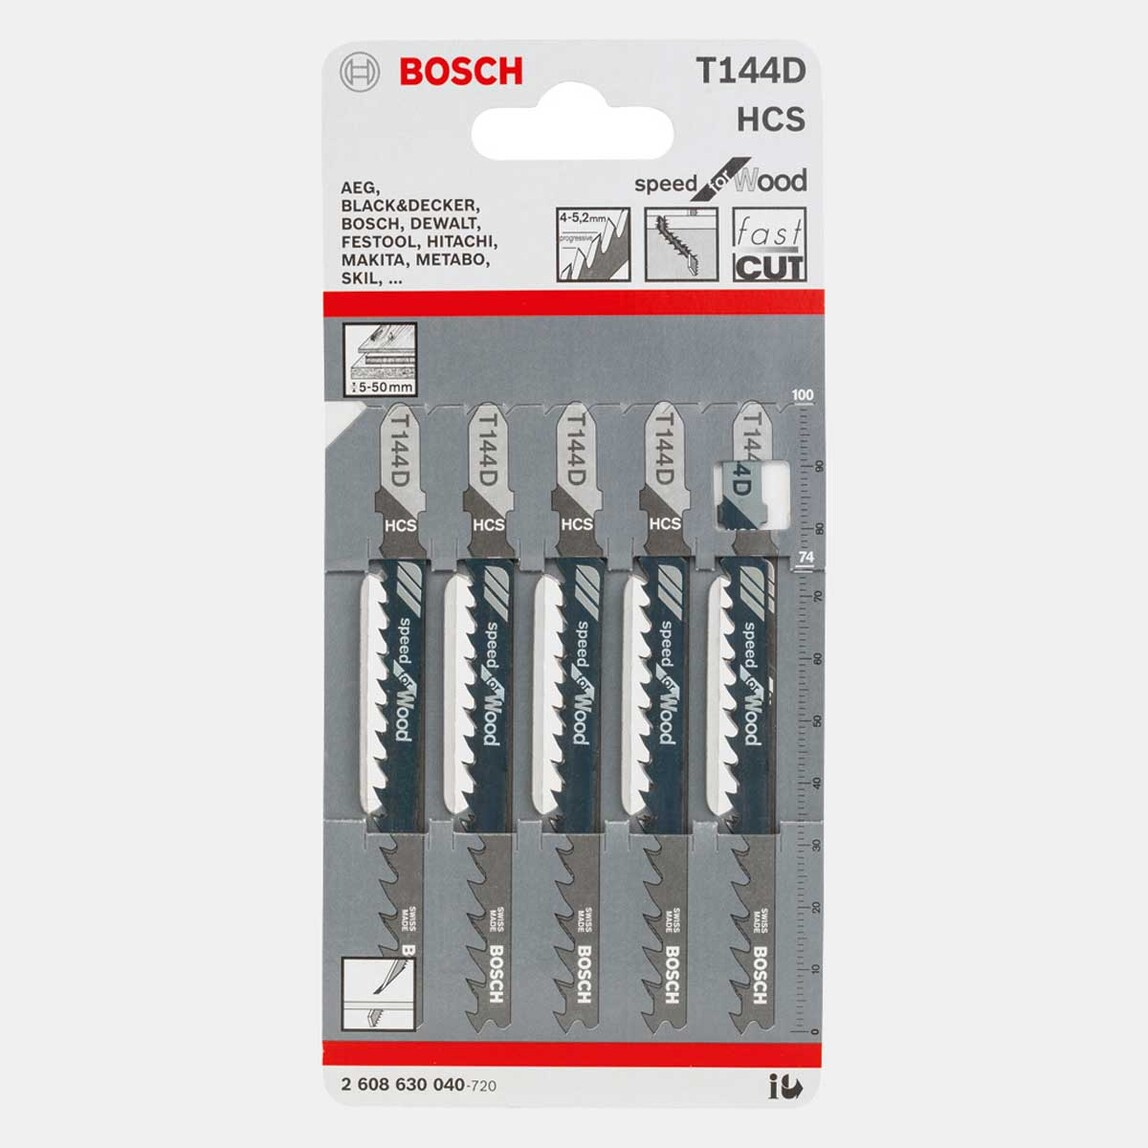    Bosch Ahşap Uç 5' li Paket T144 D Hcs 75 mm  